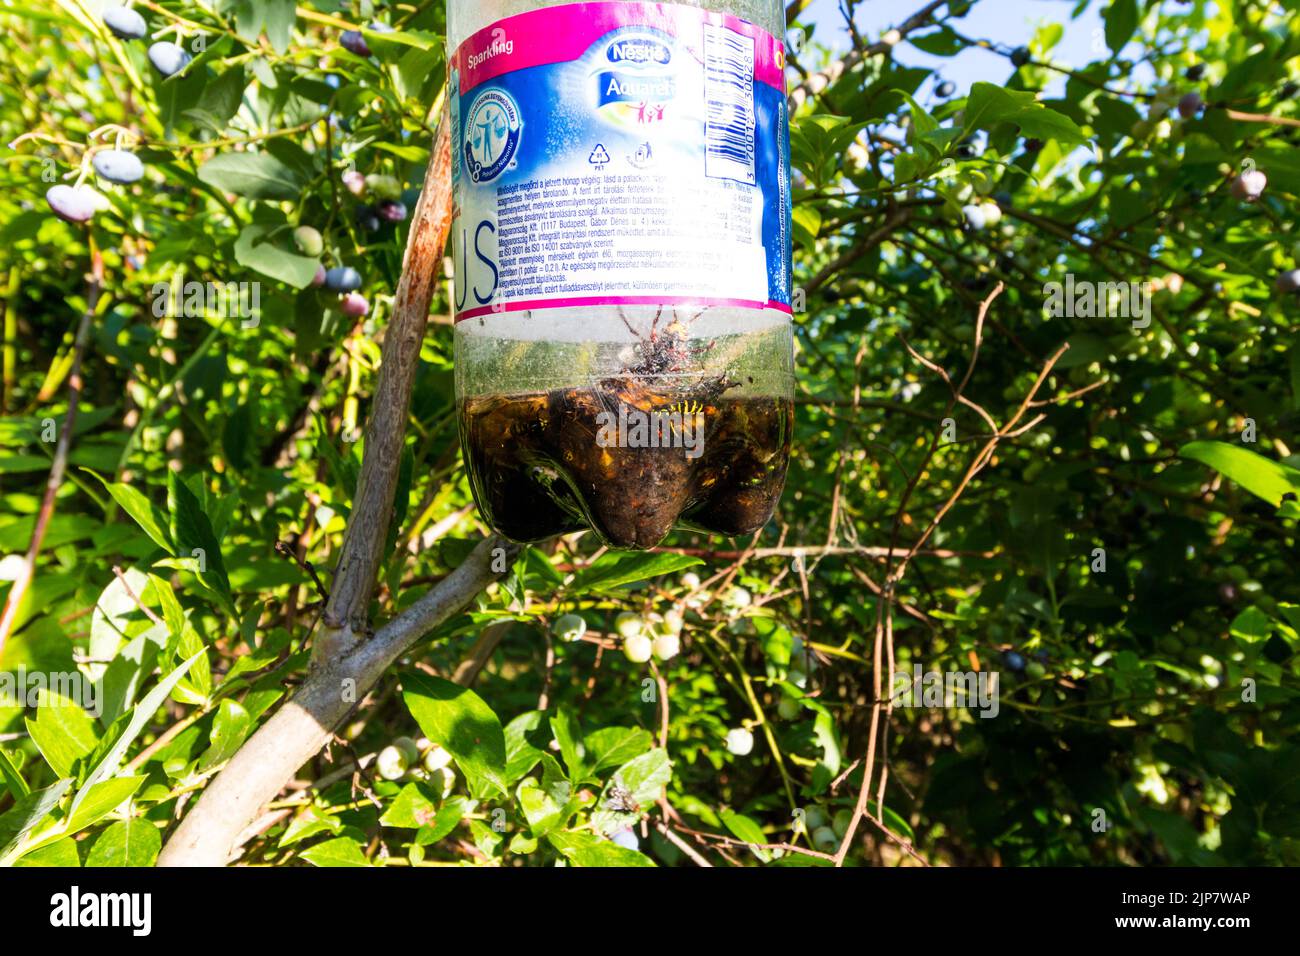 Insect trap on Northern highbush blueberry, Vaccinium corymbosum 'Bluecrop' grown in garden, Hungary, Europe Stock Photo